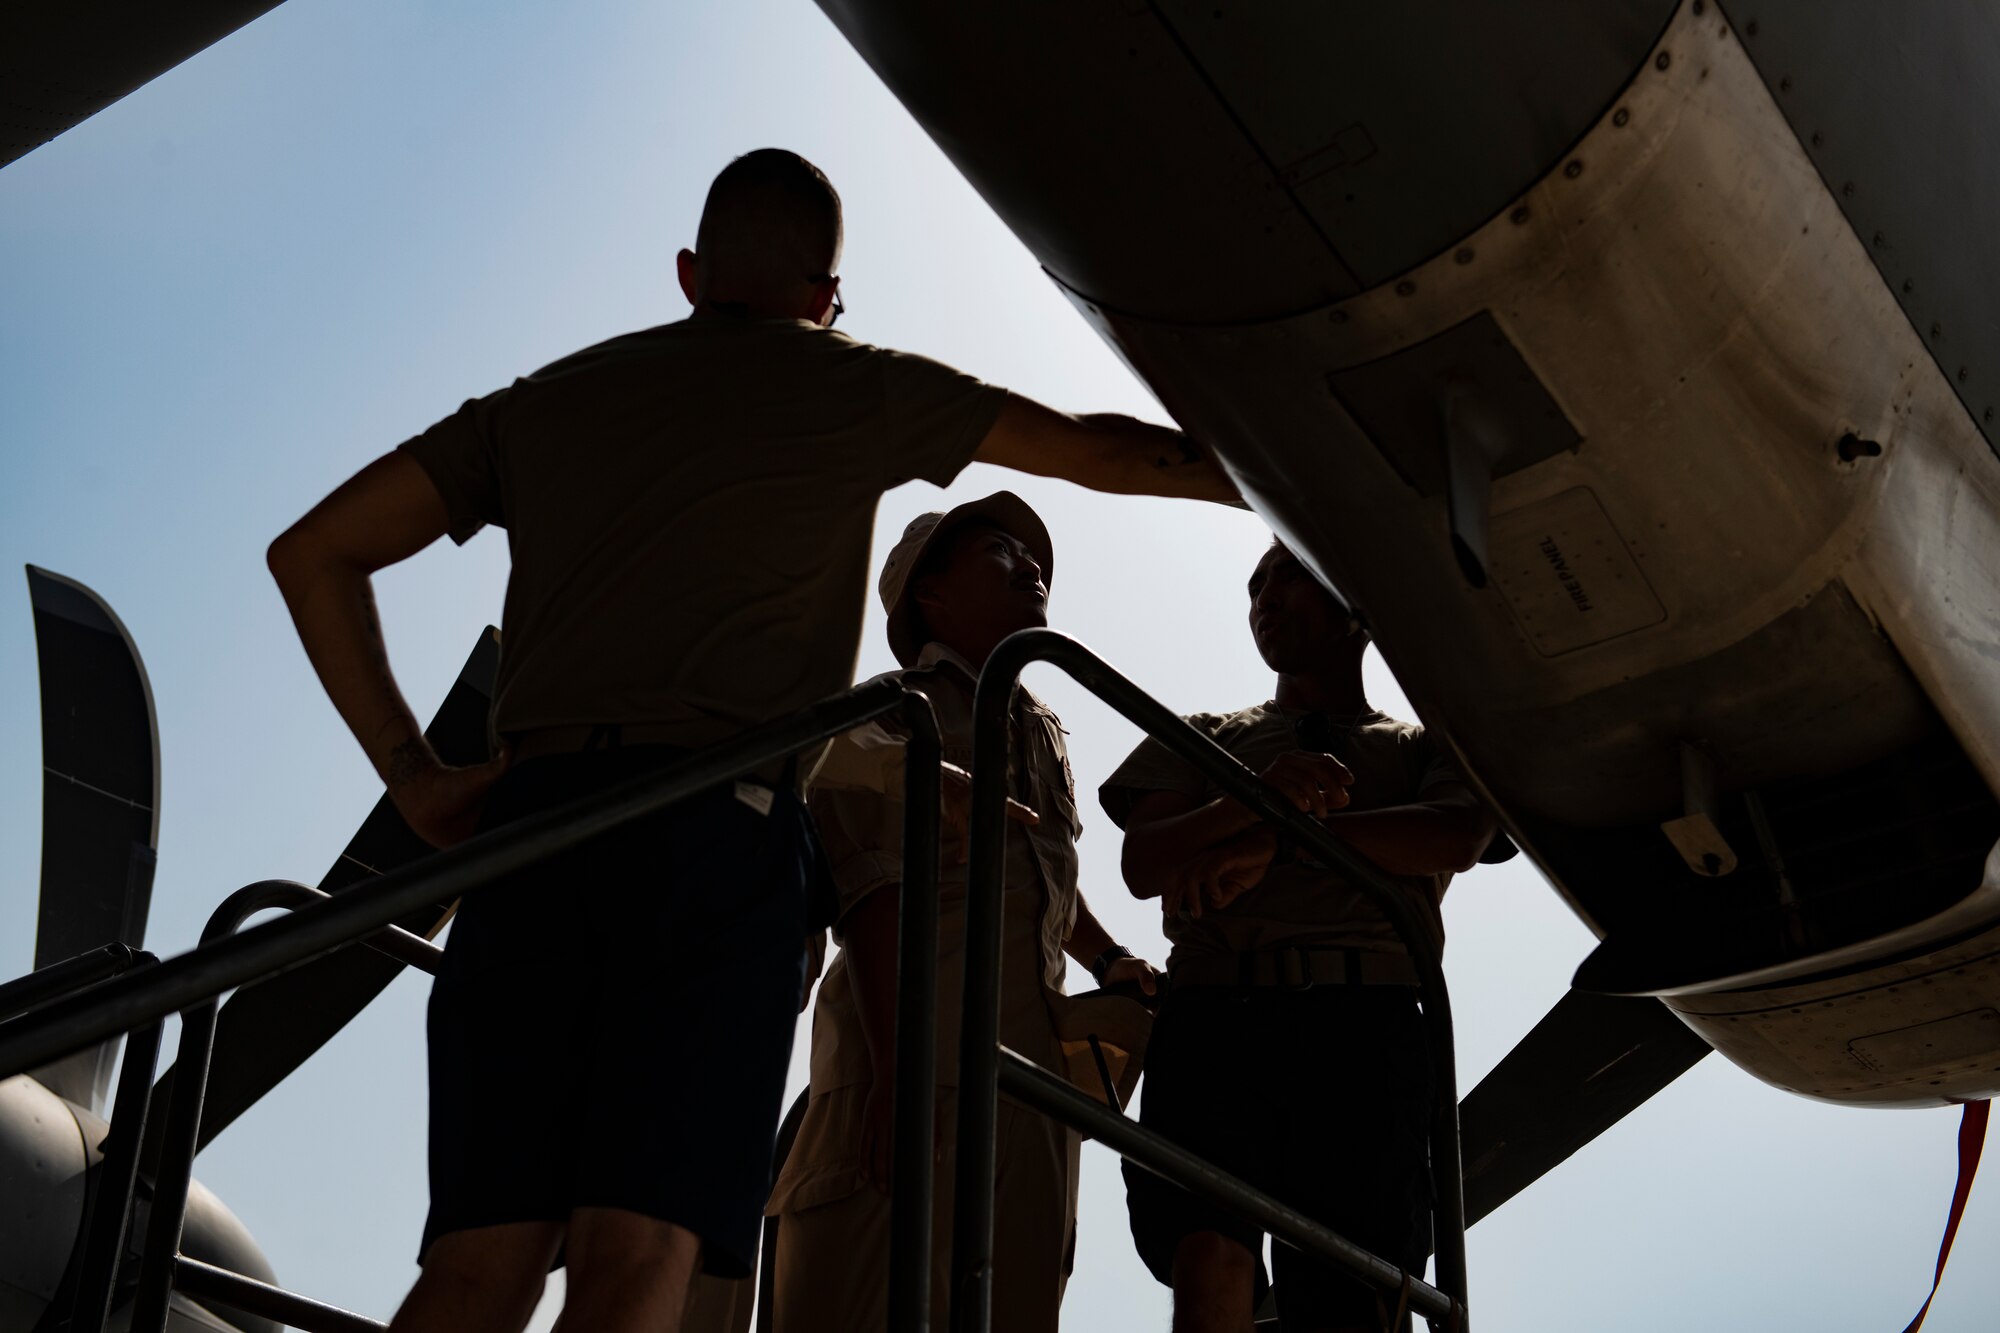 Photo of three men standing next to an airplane engine